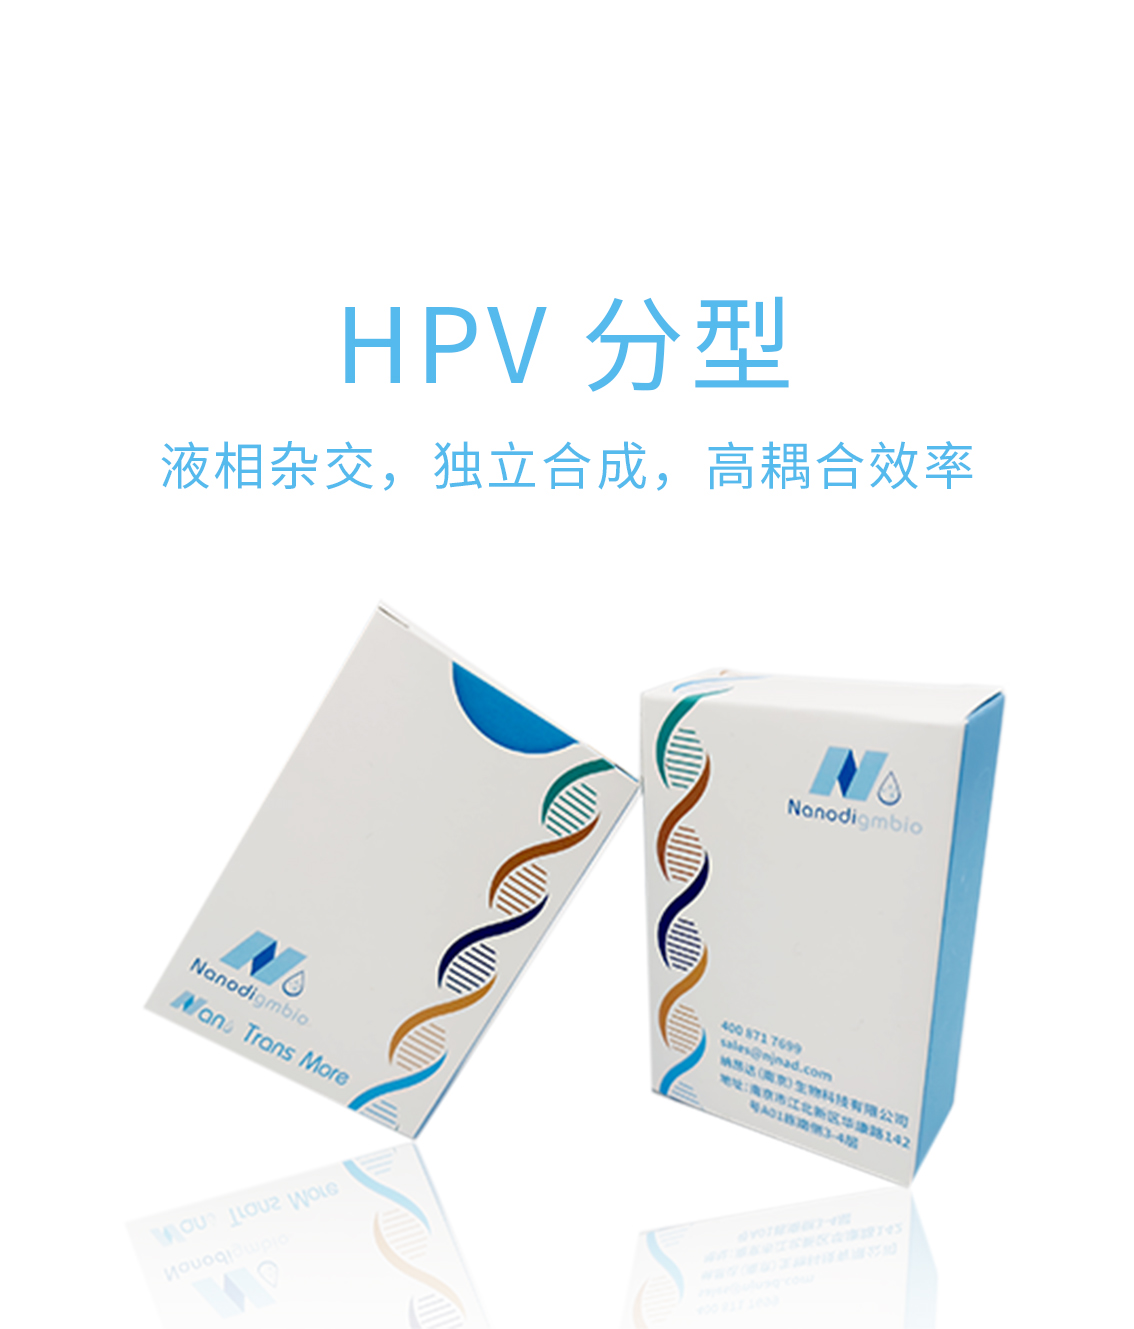 HPVisual Panel v1.0